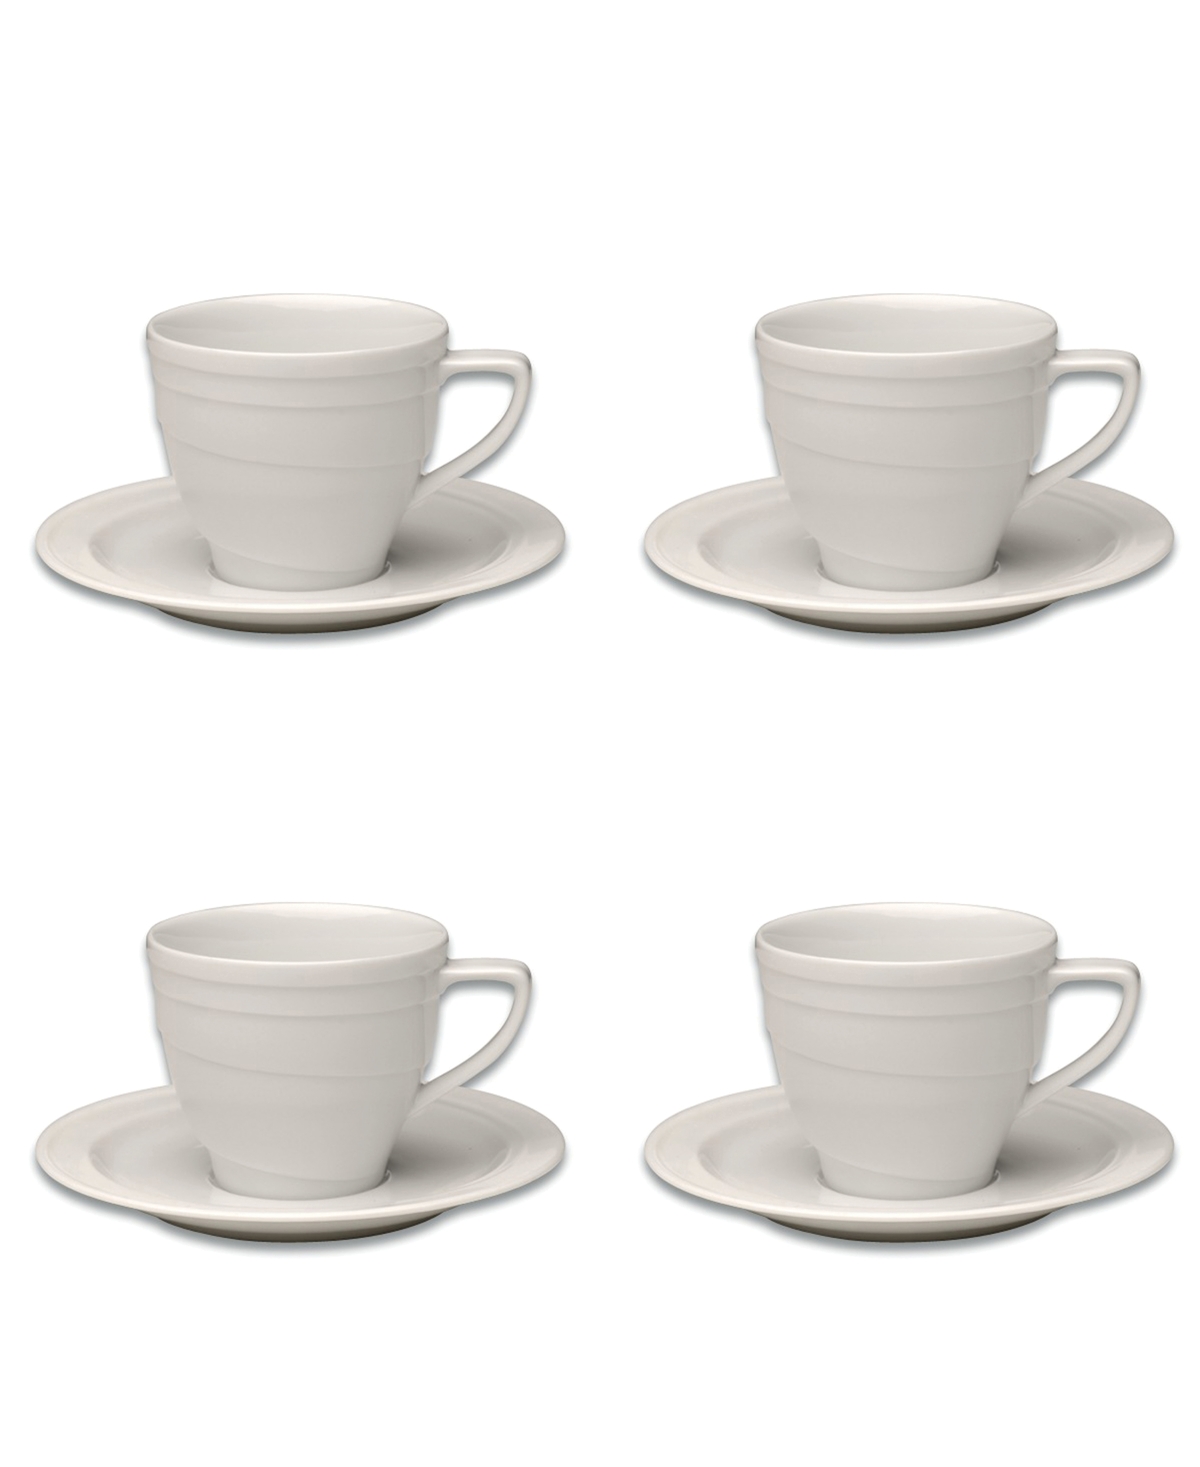 Essentials 6 Oz Porcelain Coffee Cup Saucer, Set of 4 - White